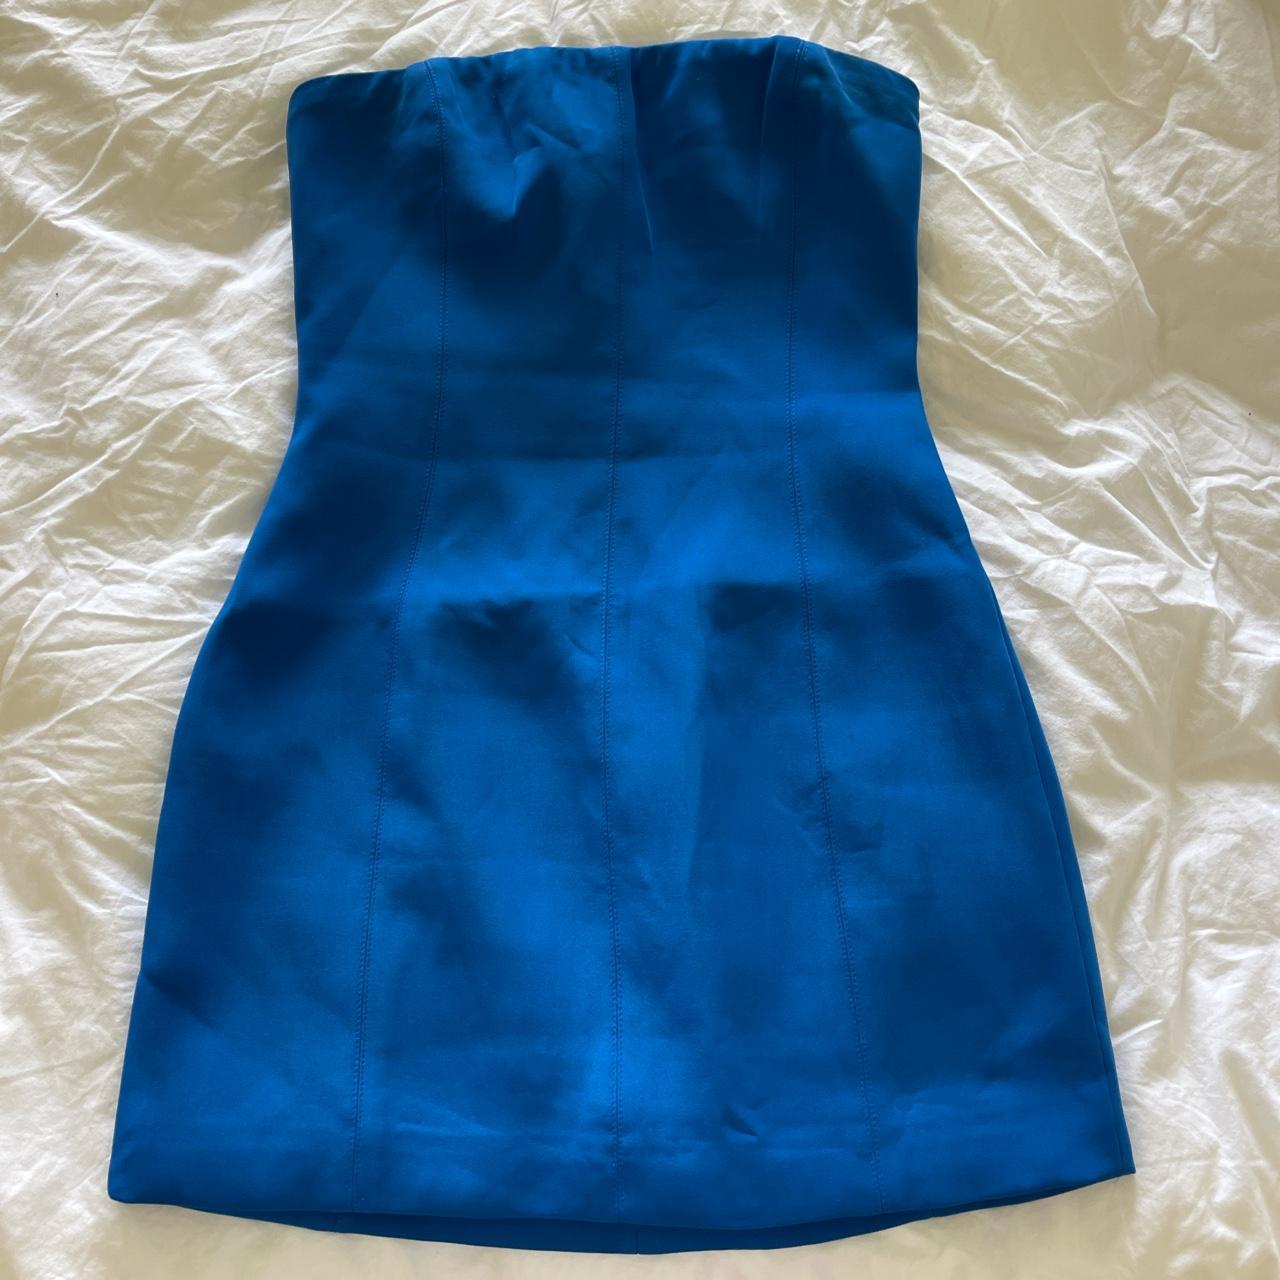 Meshki Women's Blue Dress | Depop